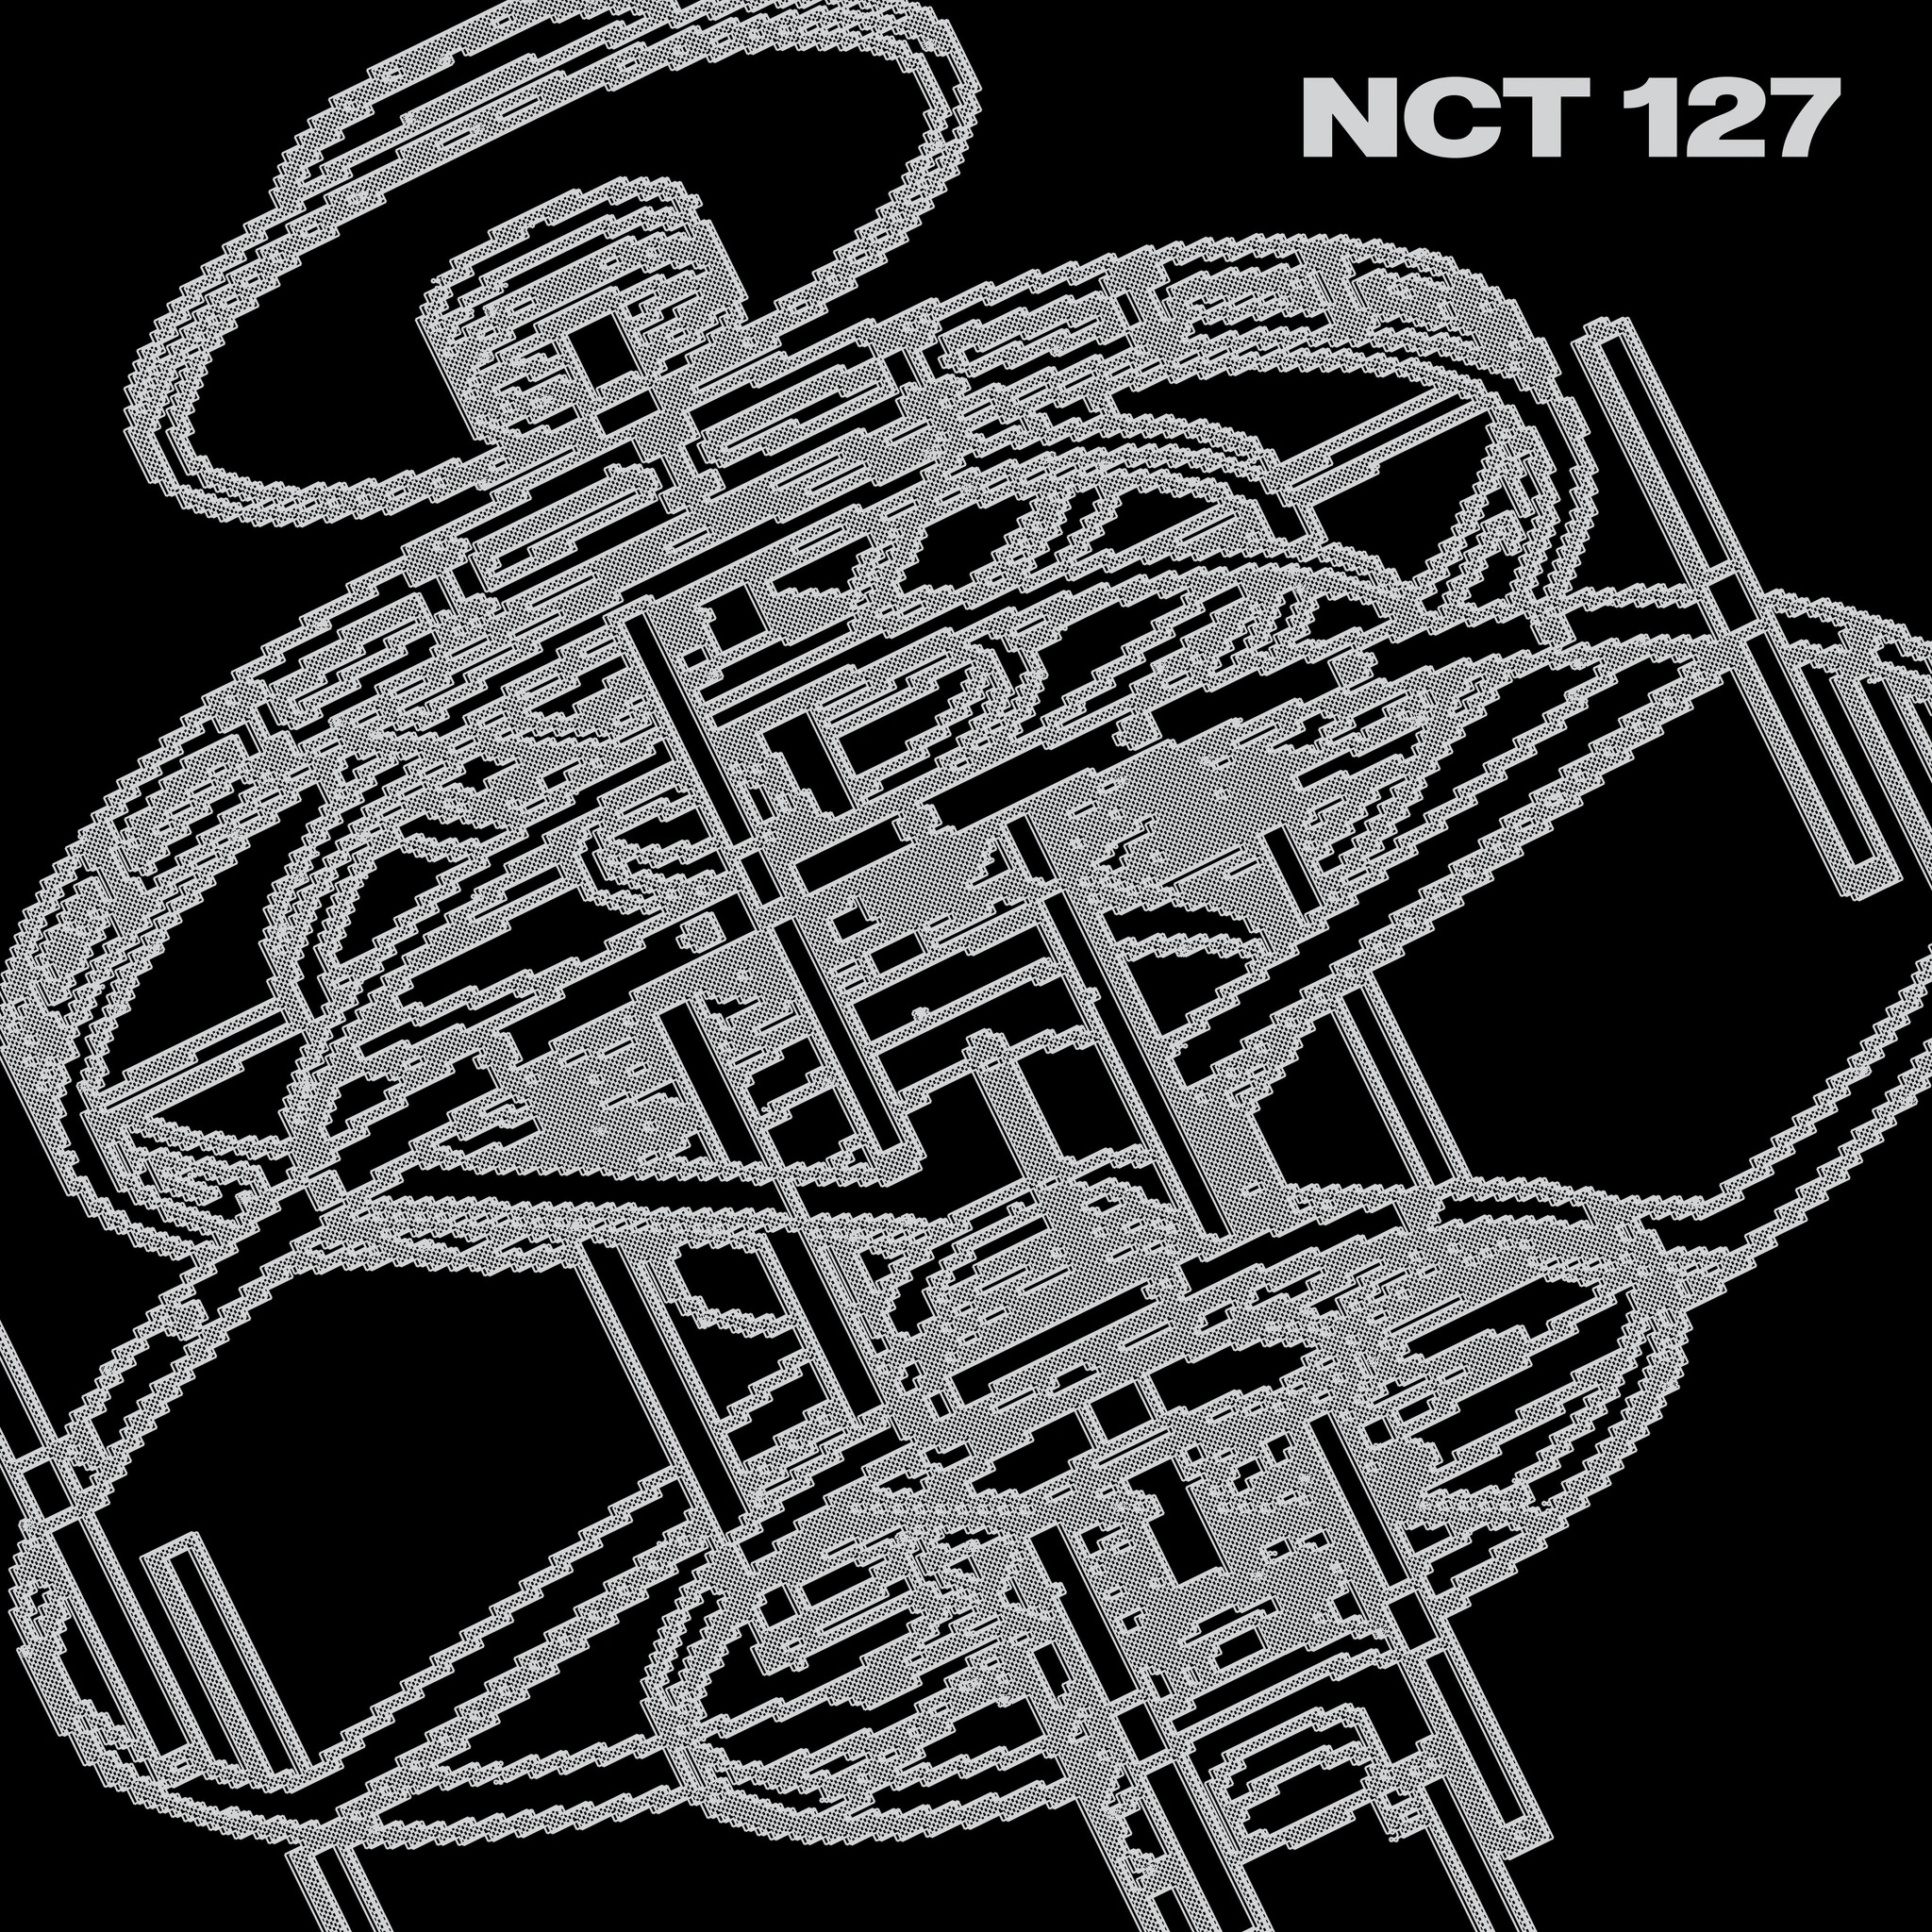 NCT 127 Fact Check album cover